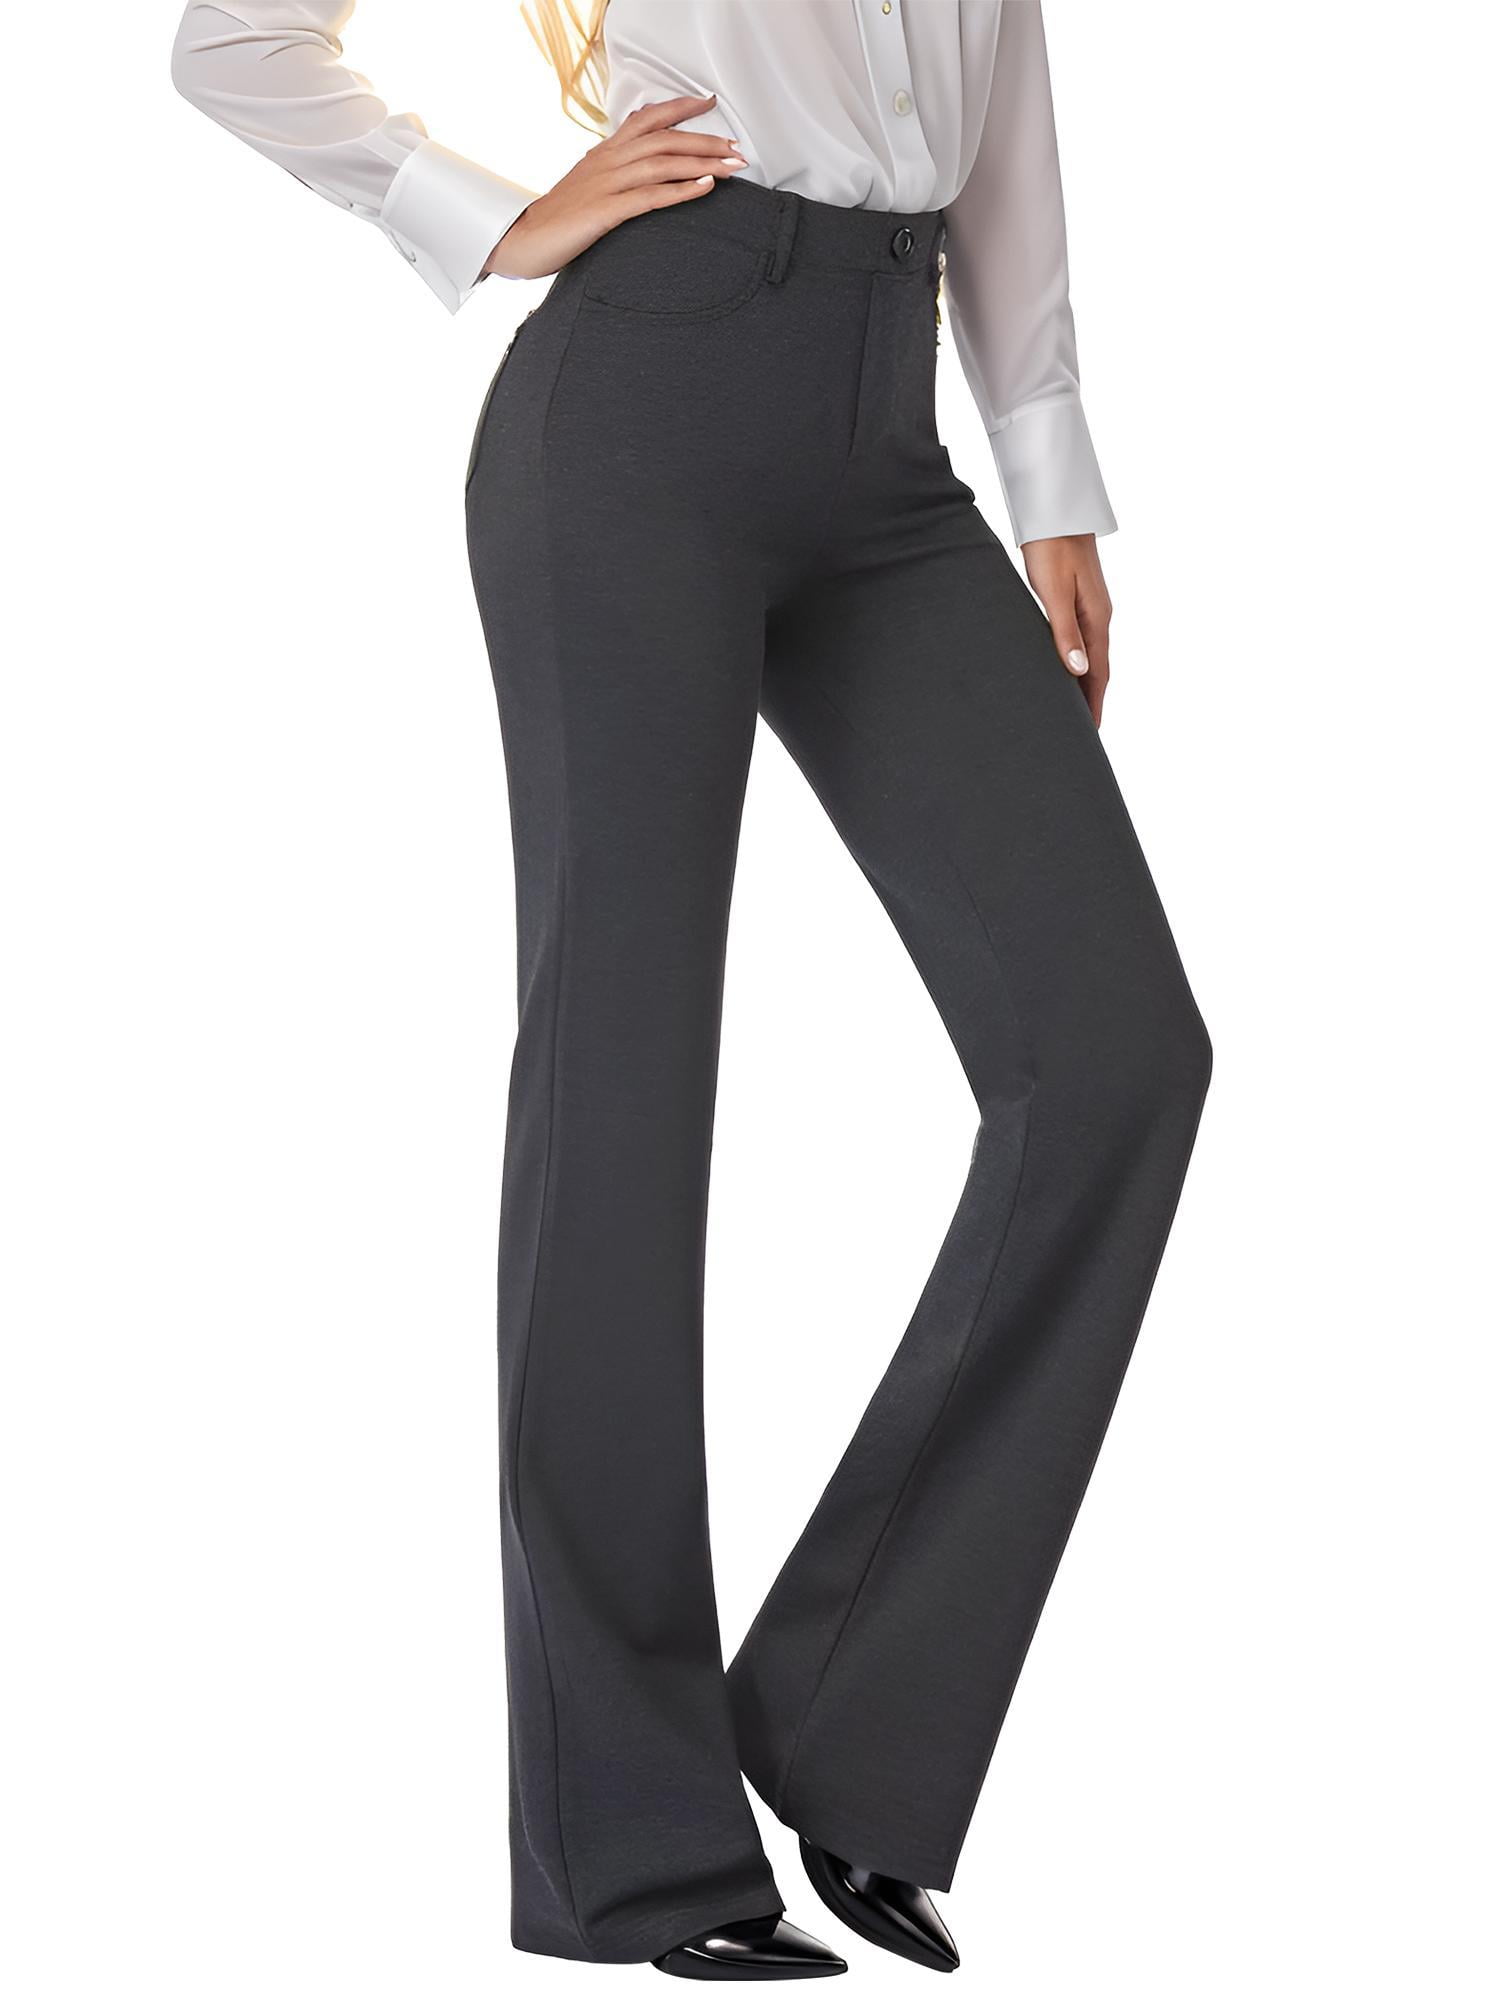 Weardear Women's Stretchy Bootcut Dress Pants with Pockets Tall, Petite ...